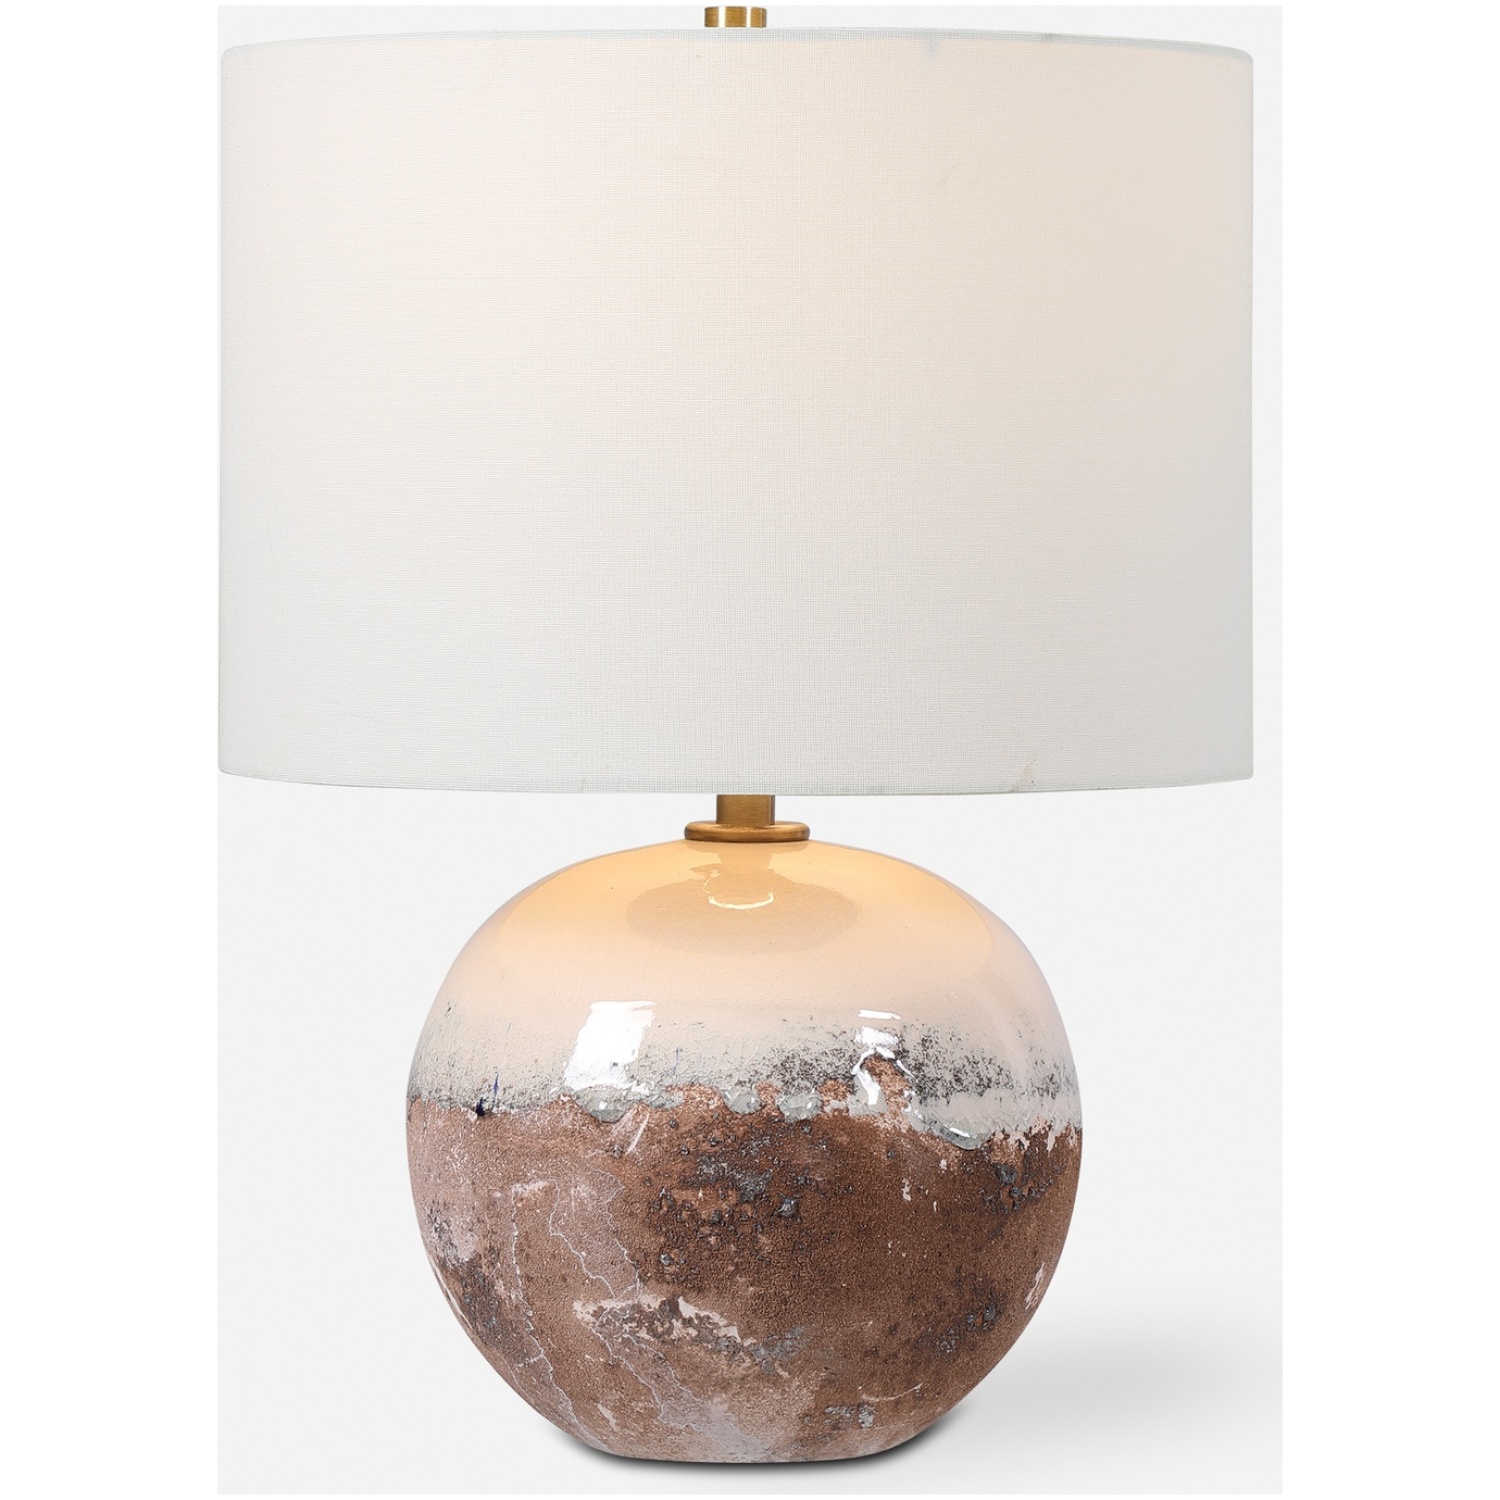 Durango-Terracotta Accent Lamp